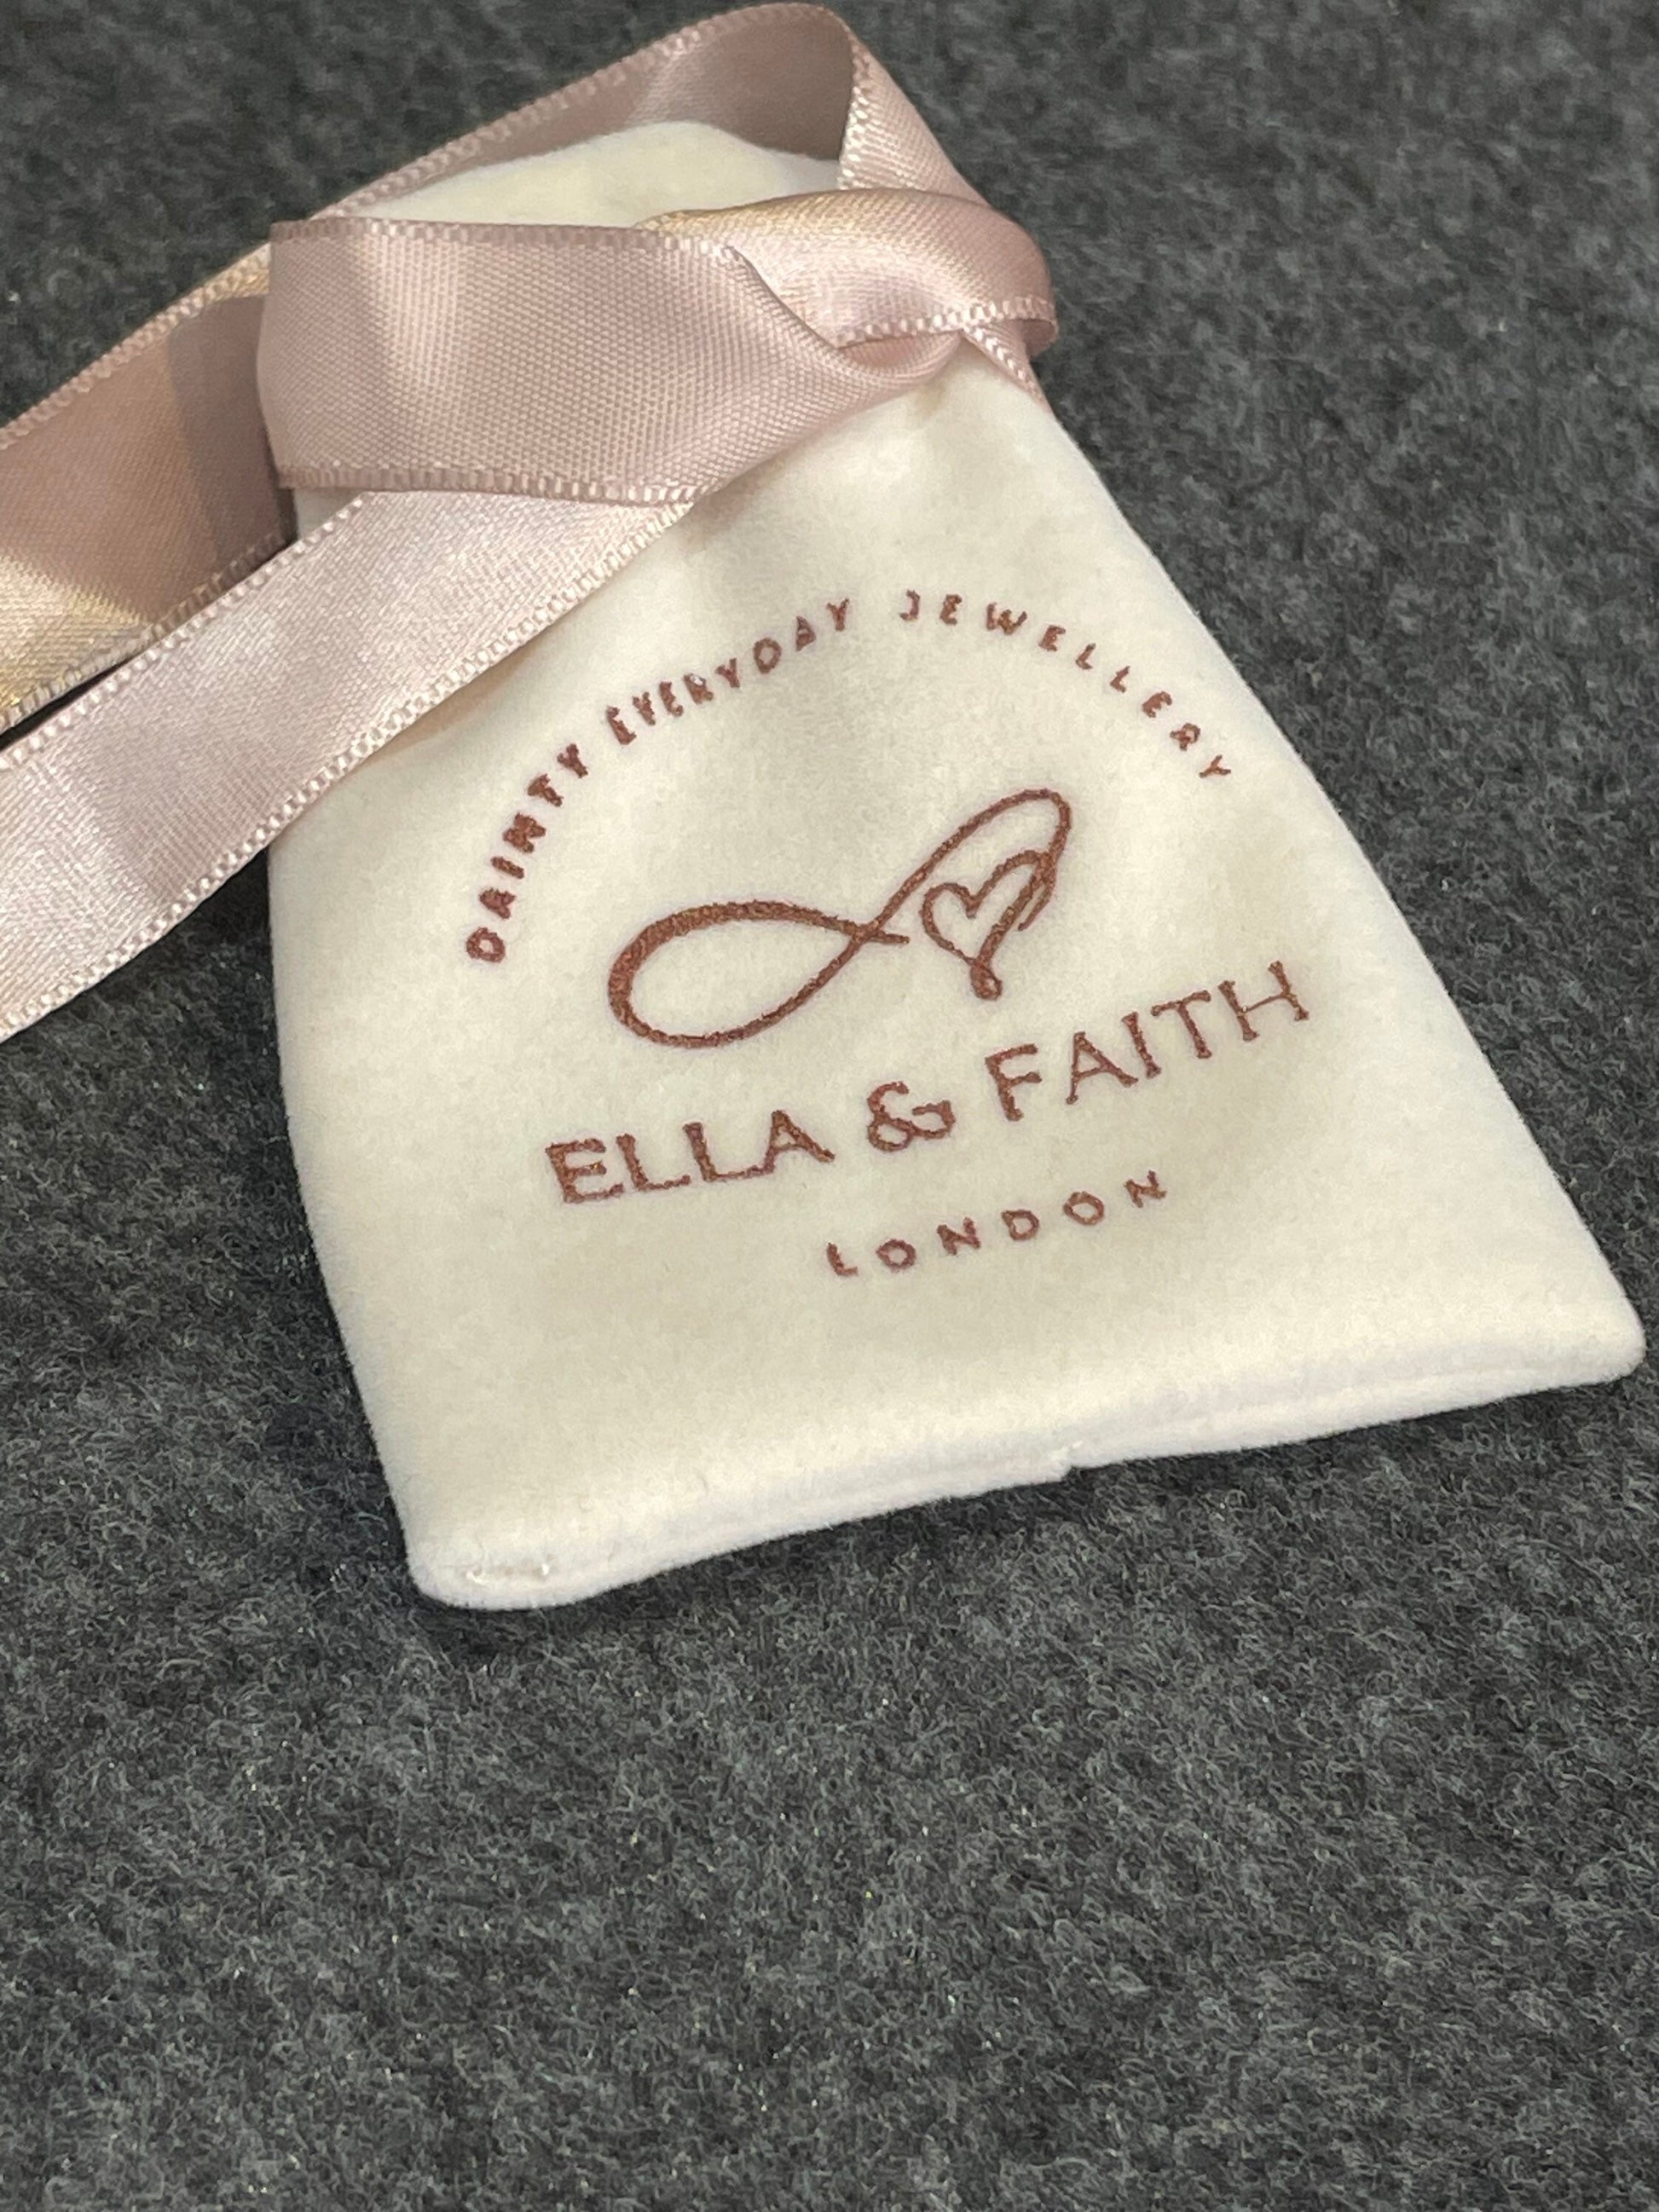 Tiny Stud Earrings | Tiny Ball Studs | Ella & Faith London